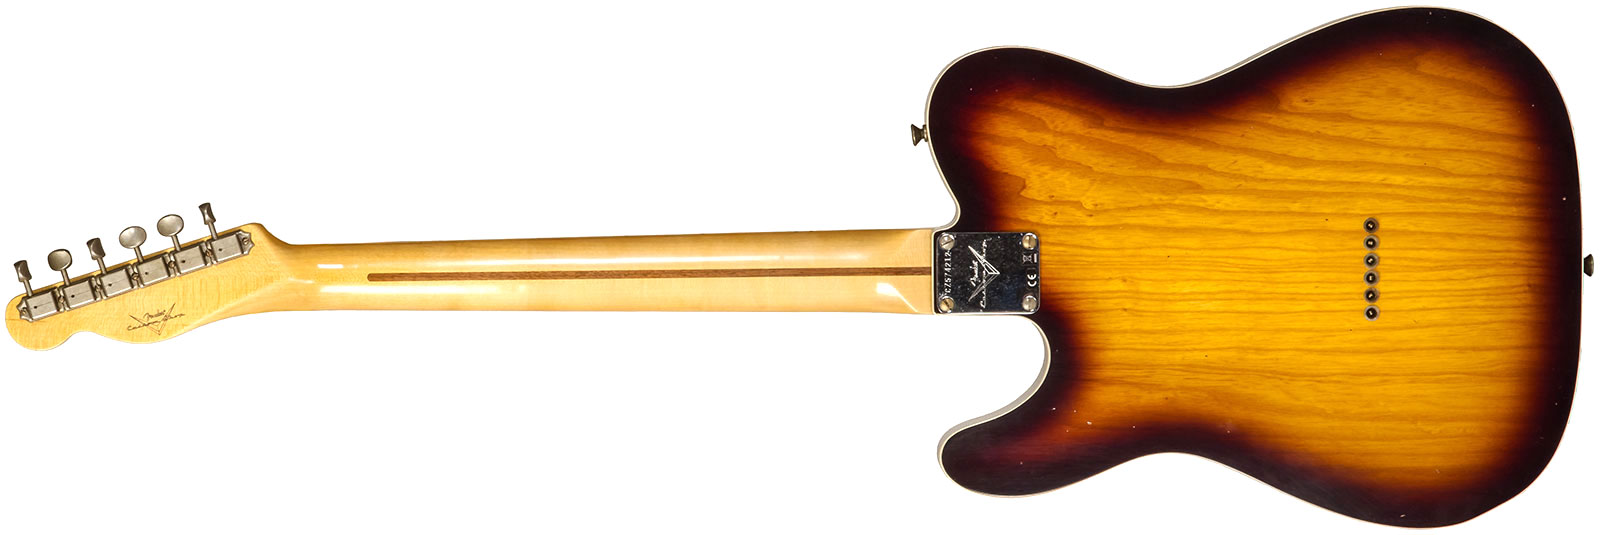 Fender Custom Shop Tele Thinline 50s Mn #cz574212 - Journeyman Relic Aged 2-color Sunburst - Tel shape electric guitar - Variation 2